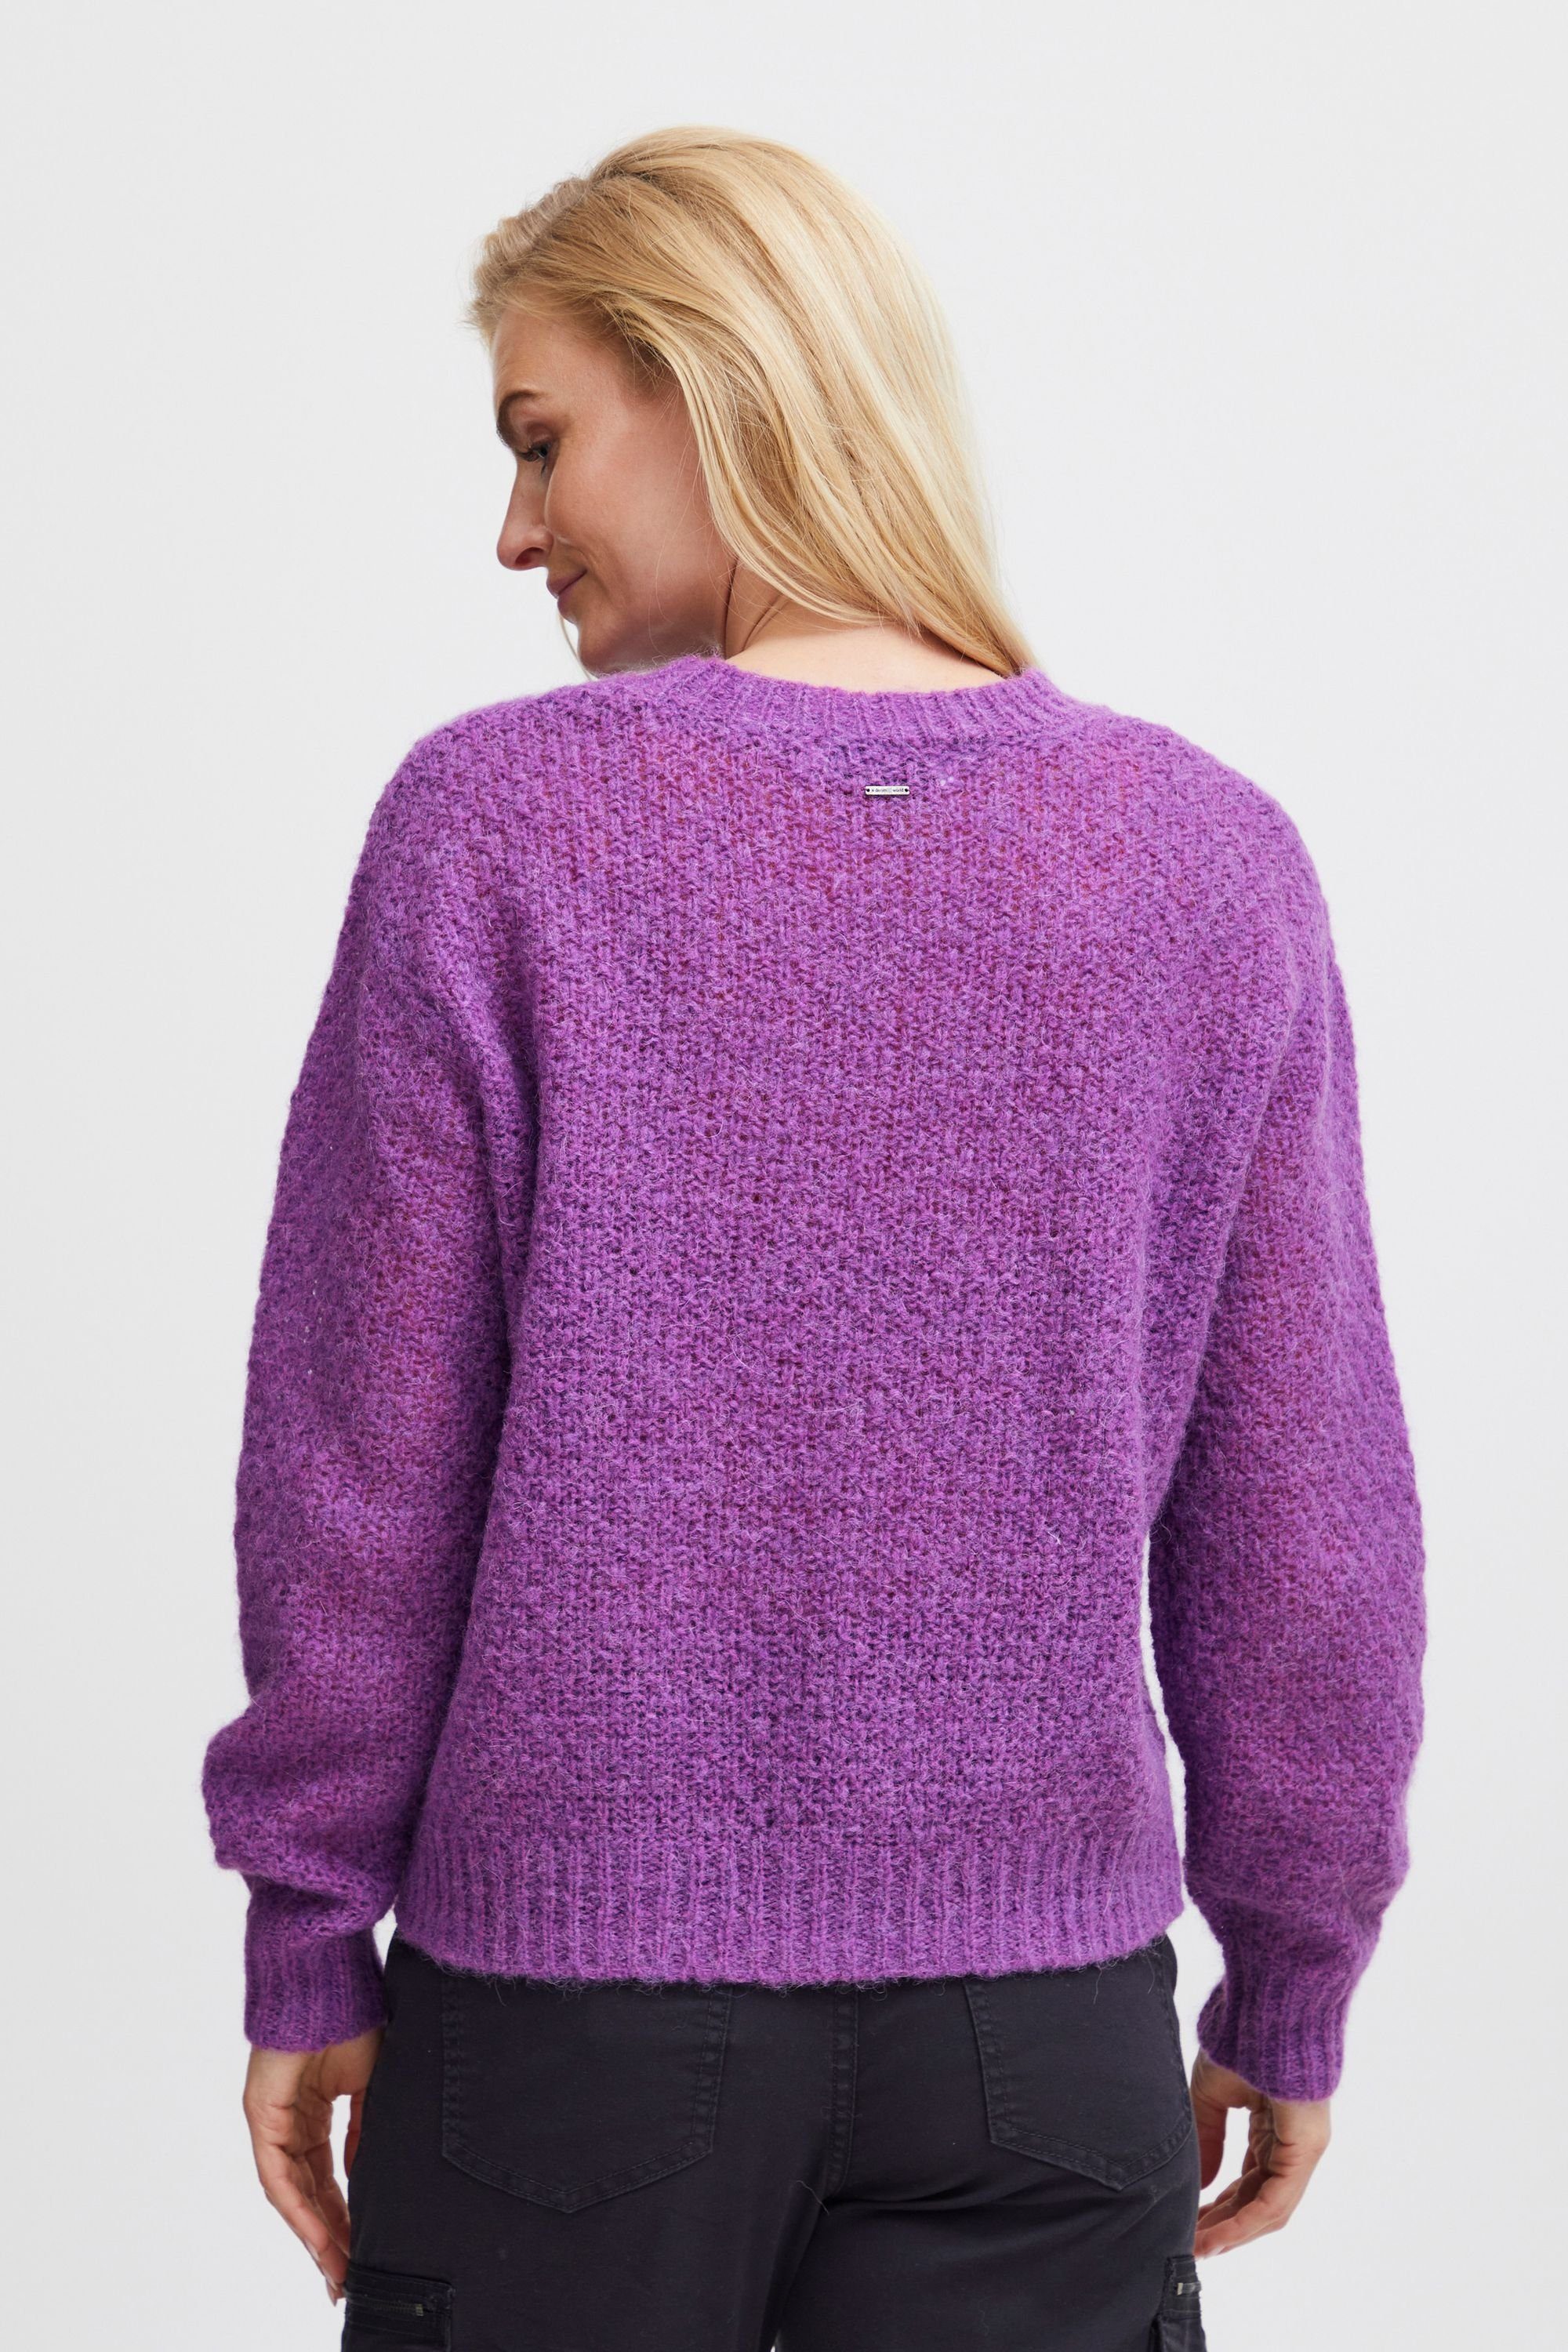 Melange Bright Strickpullover Jeans Pulz Pattern PZIRIS Pullover (202347) Purple